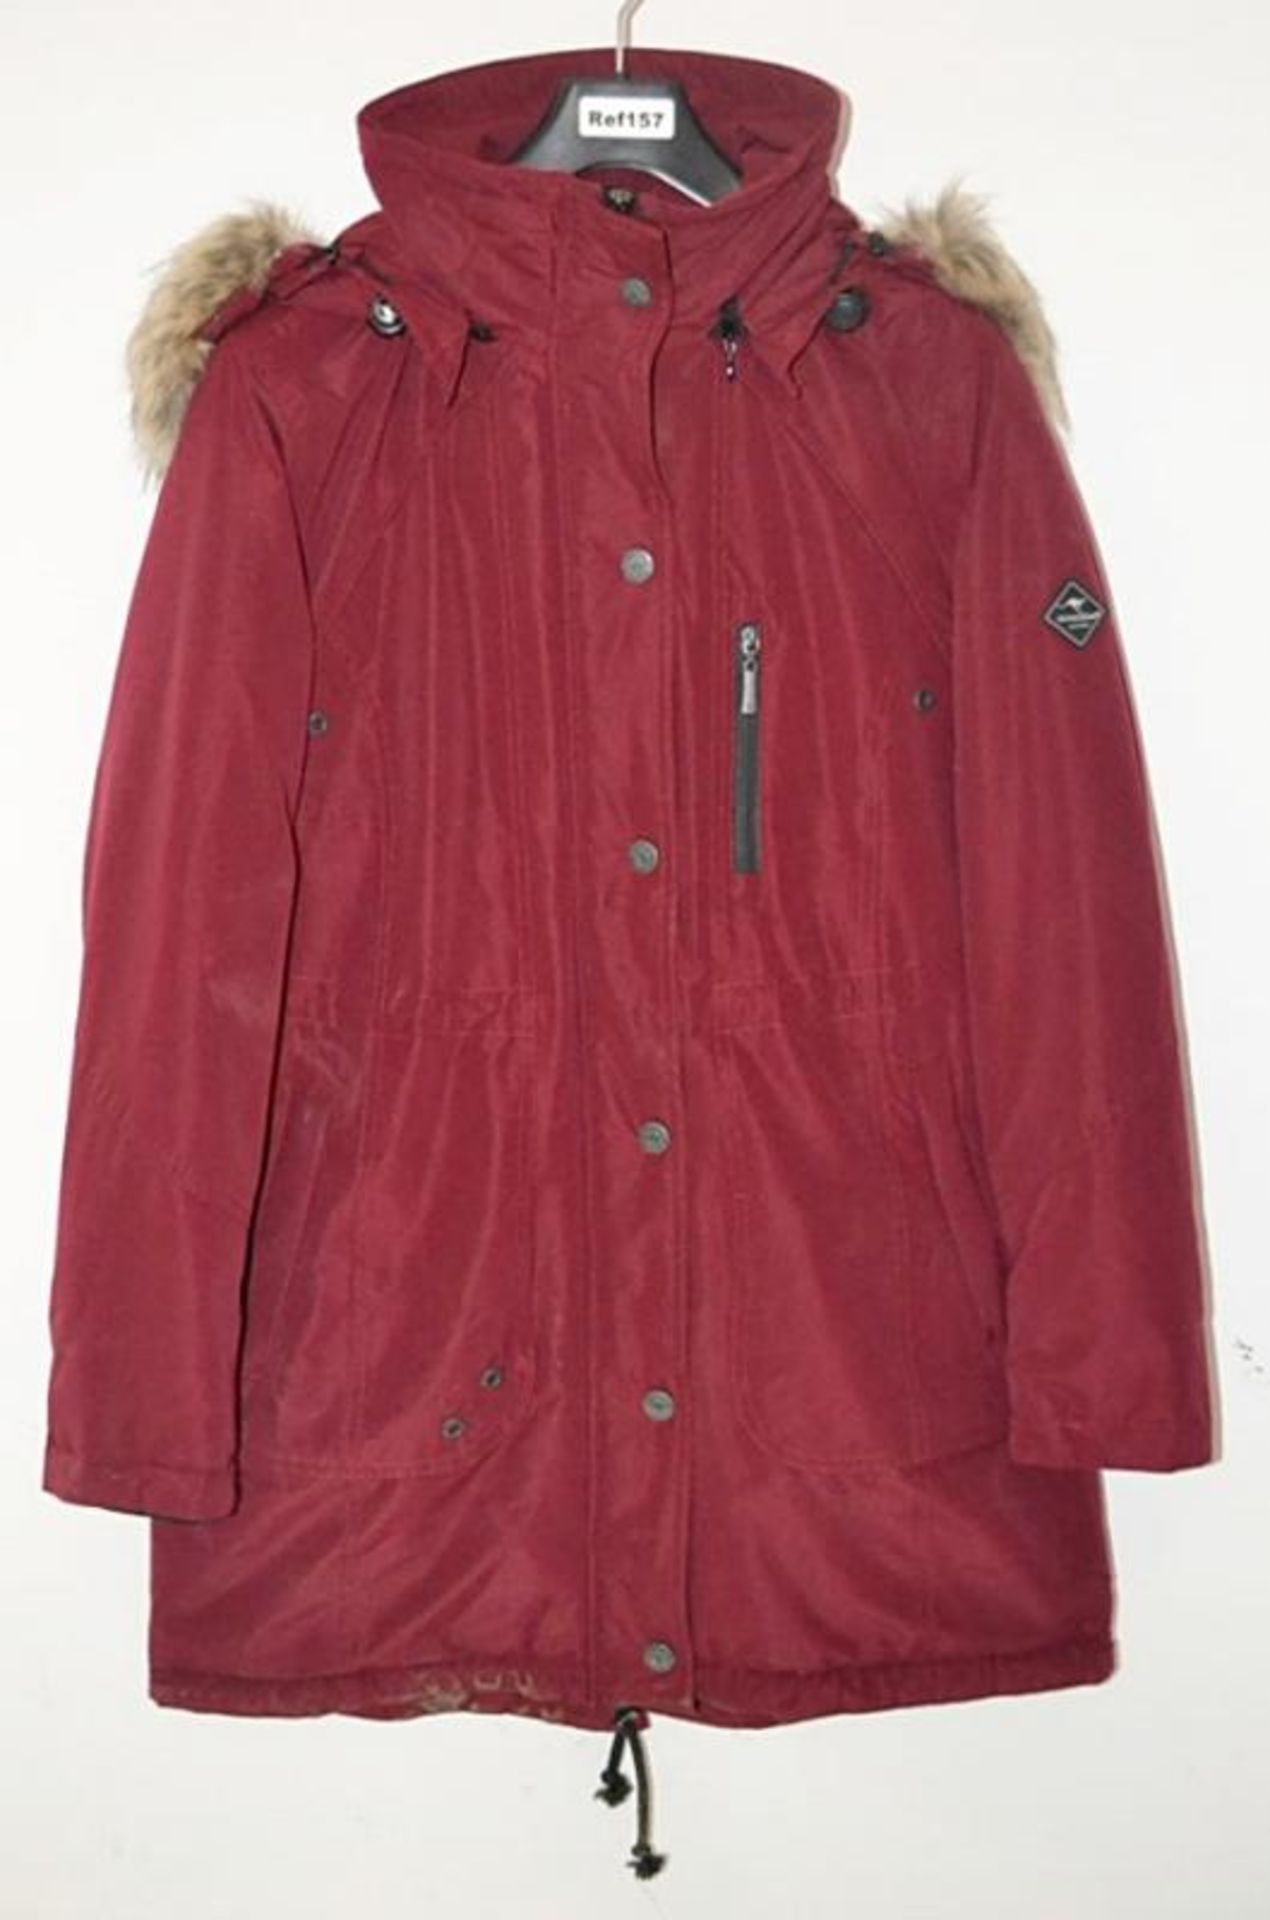 1 x Premium Branded Womens Winter Coat - Wind Proof & Water Resistant - Colour: Burgundy - UK Size 1